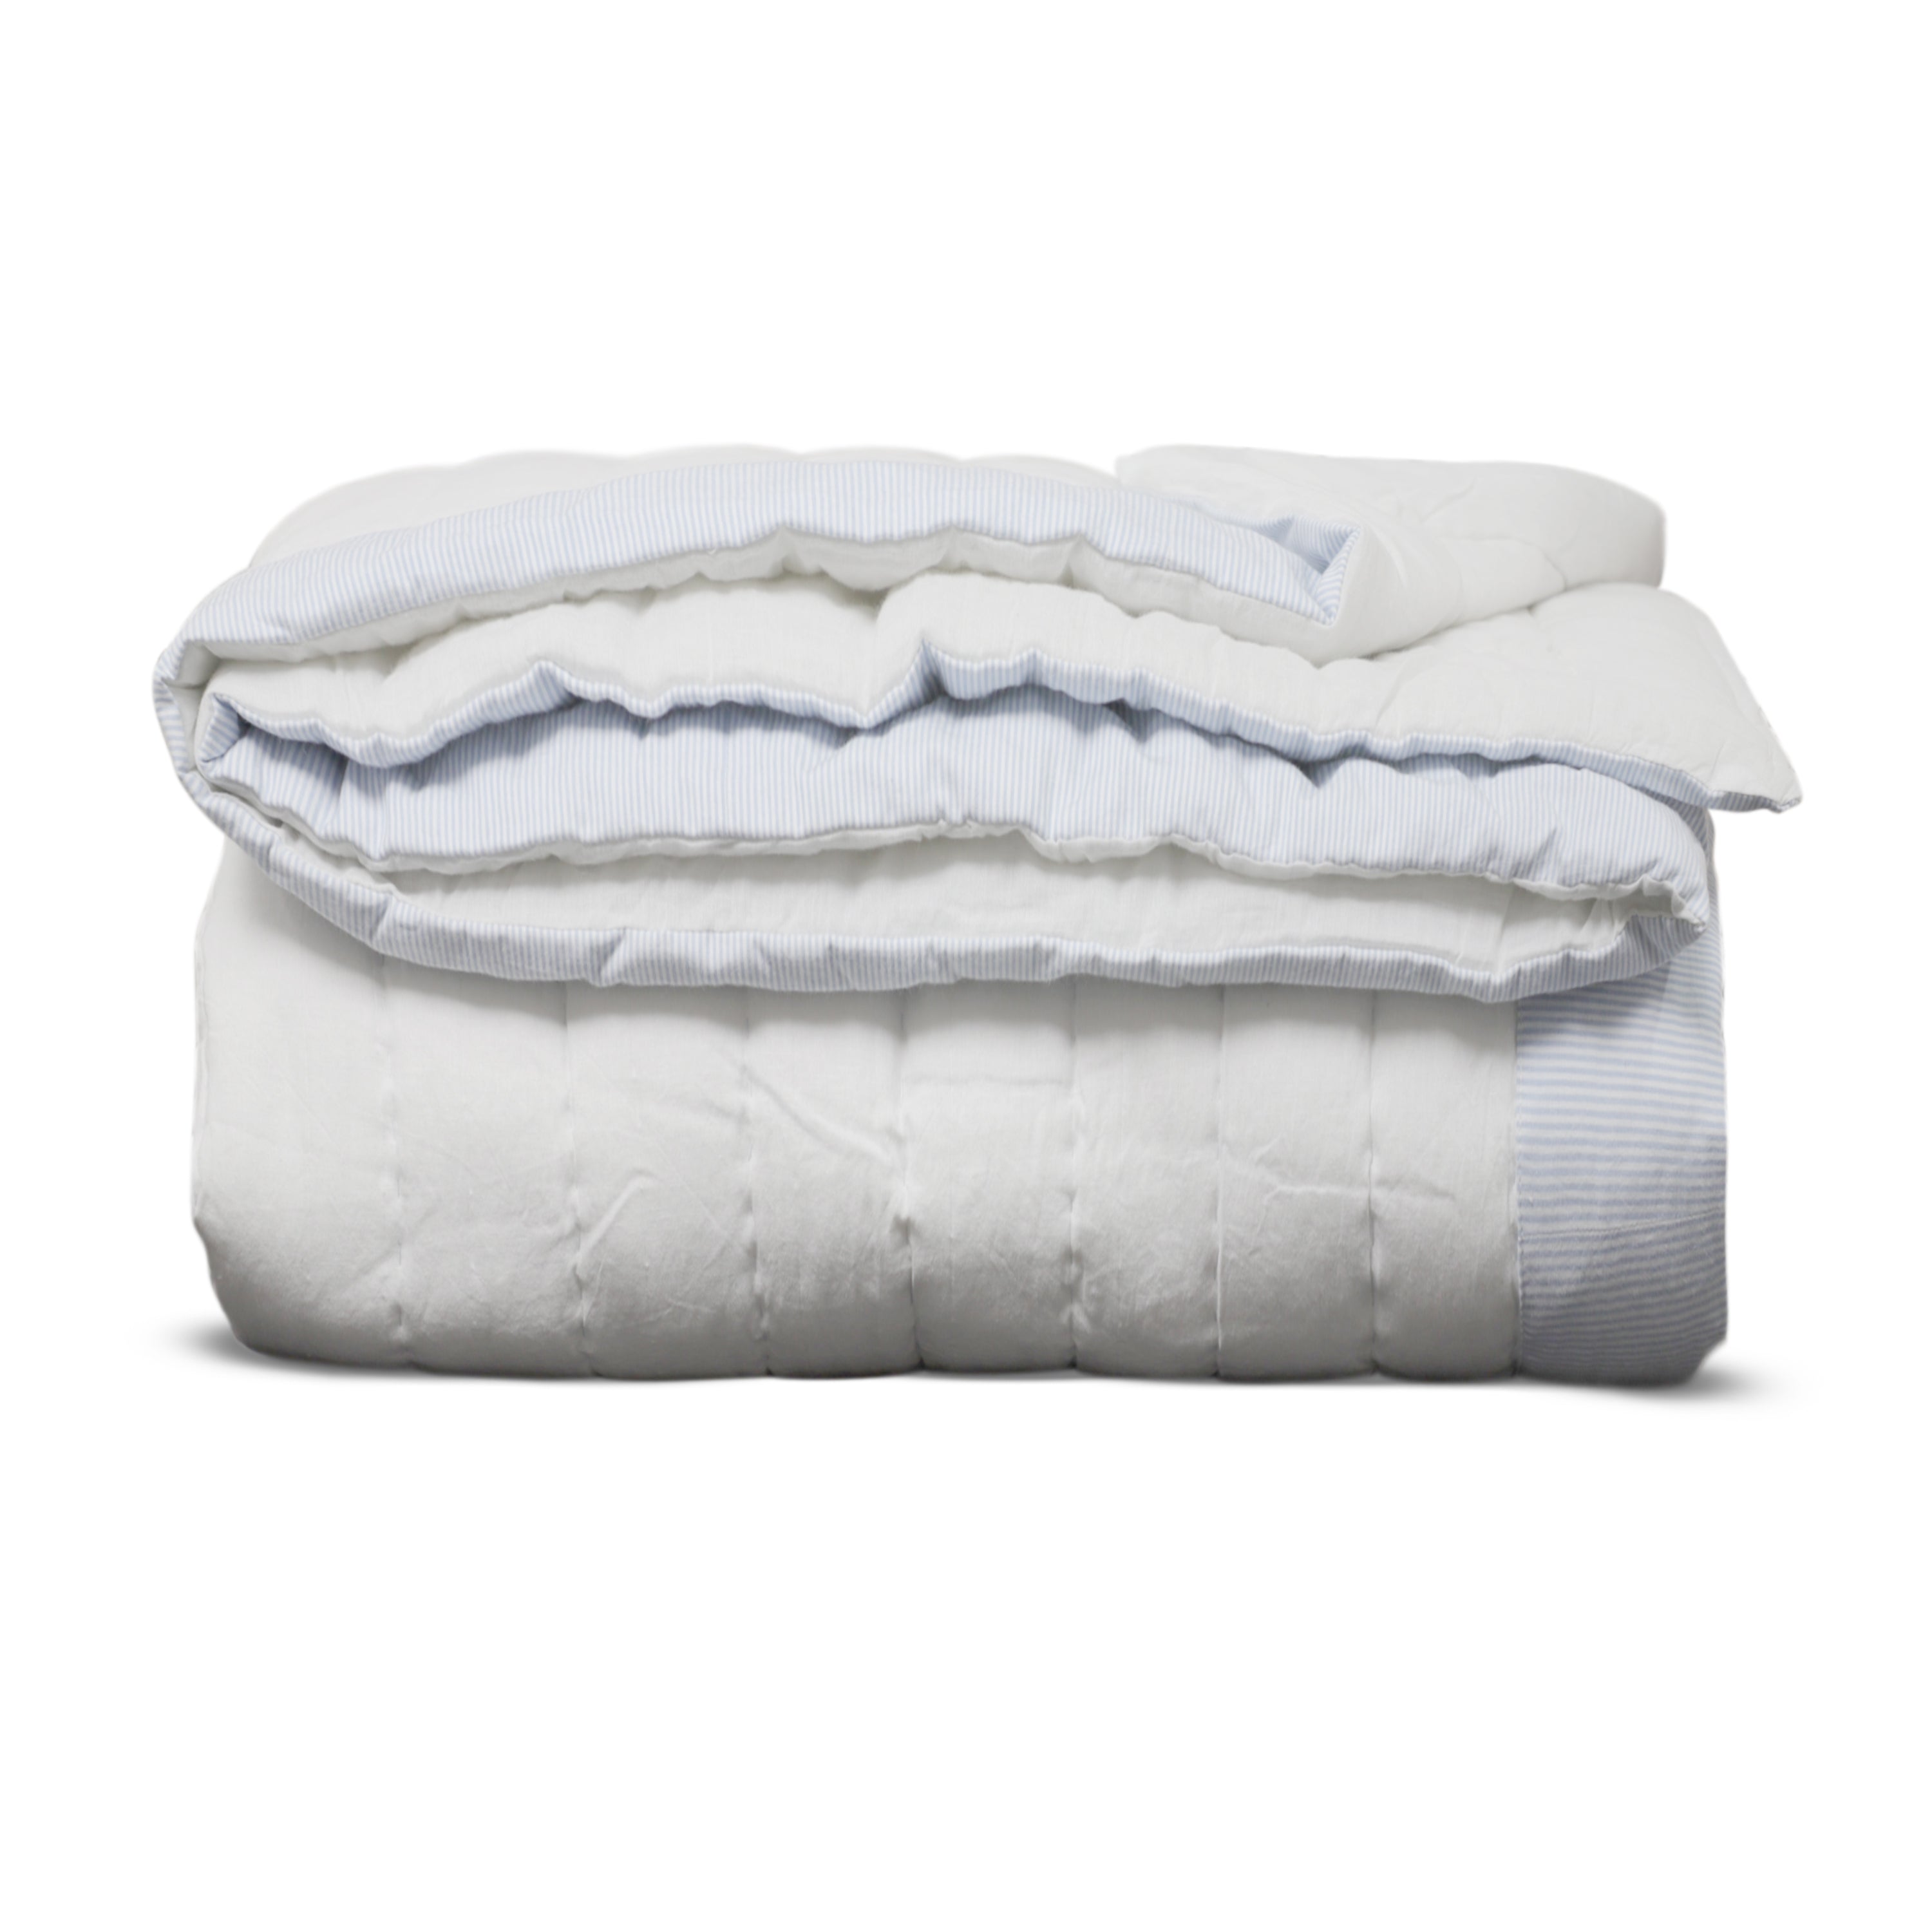 White cotton quilt with blue striped edge. Breathable cotton quilt with cotton batting. Reverses to plain cotton fabric.